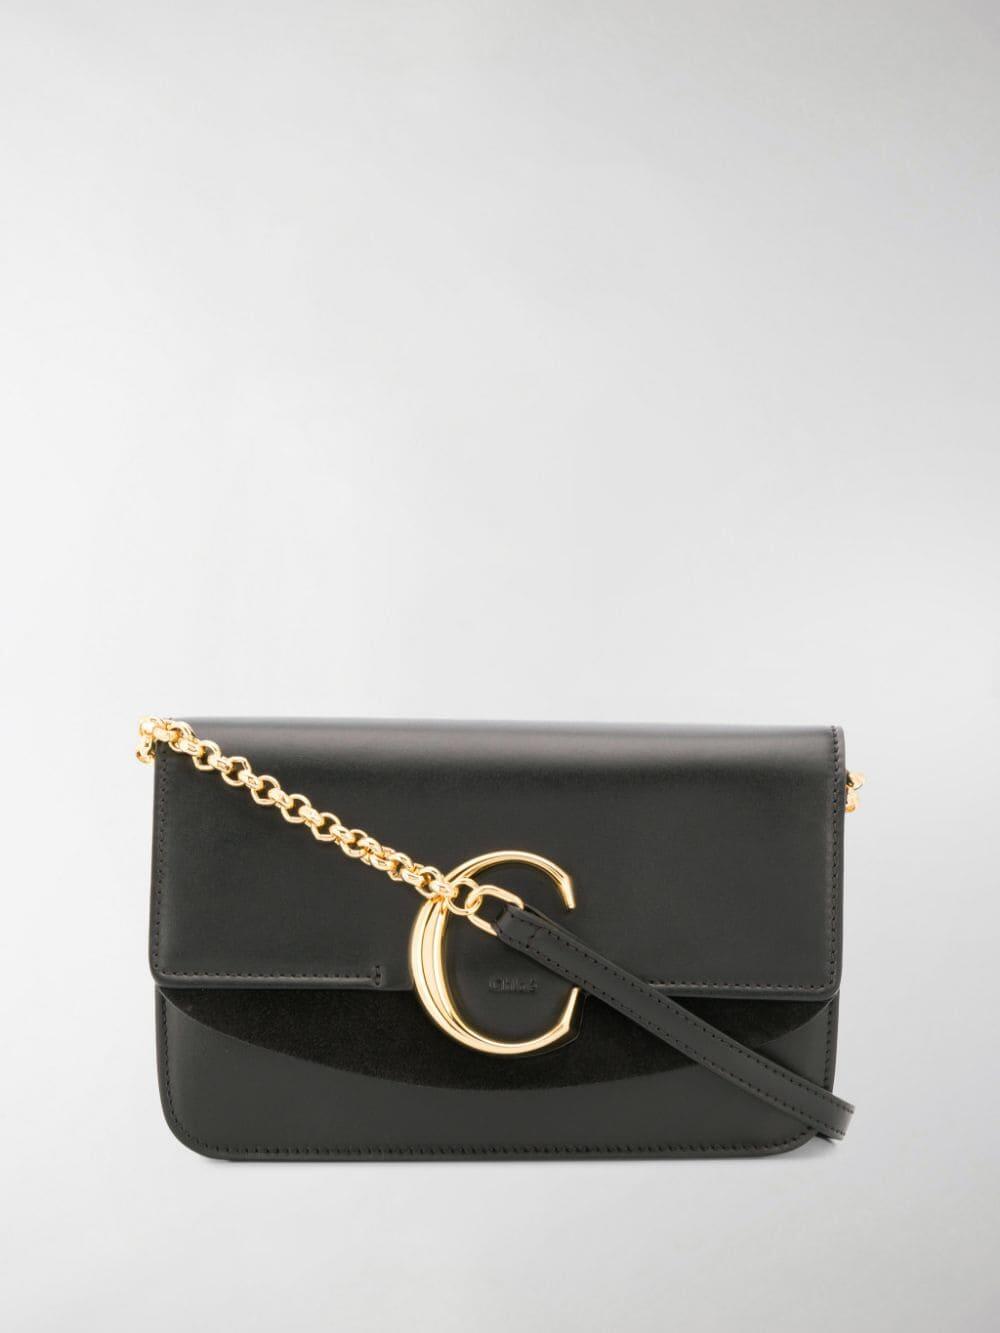 Chloé Black C Ring Leather Bag